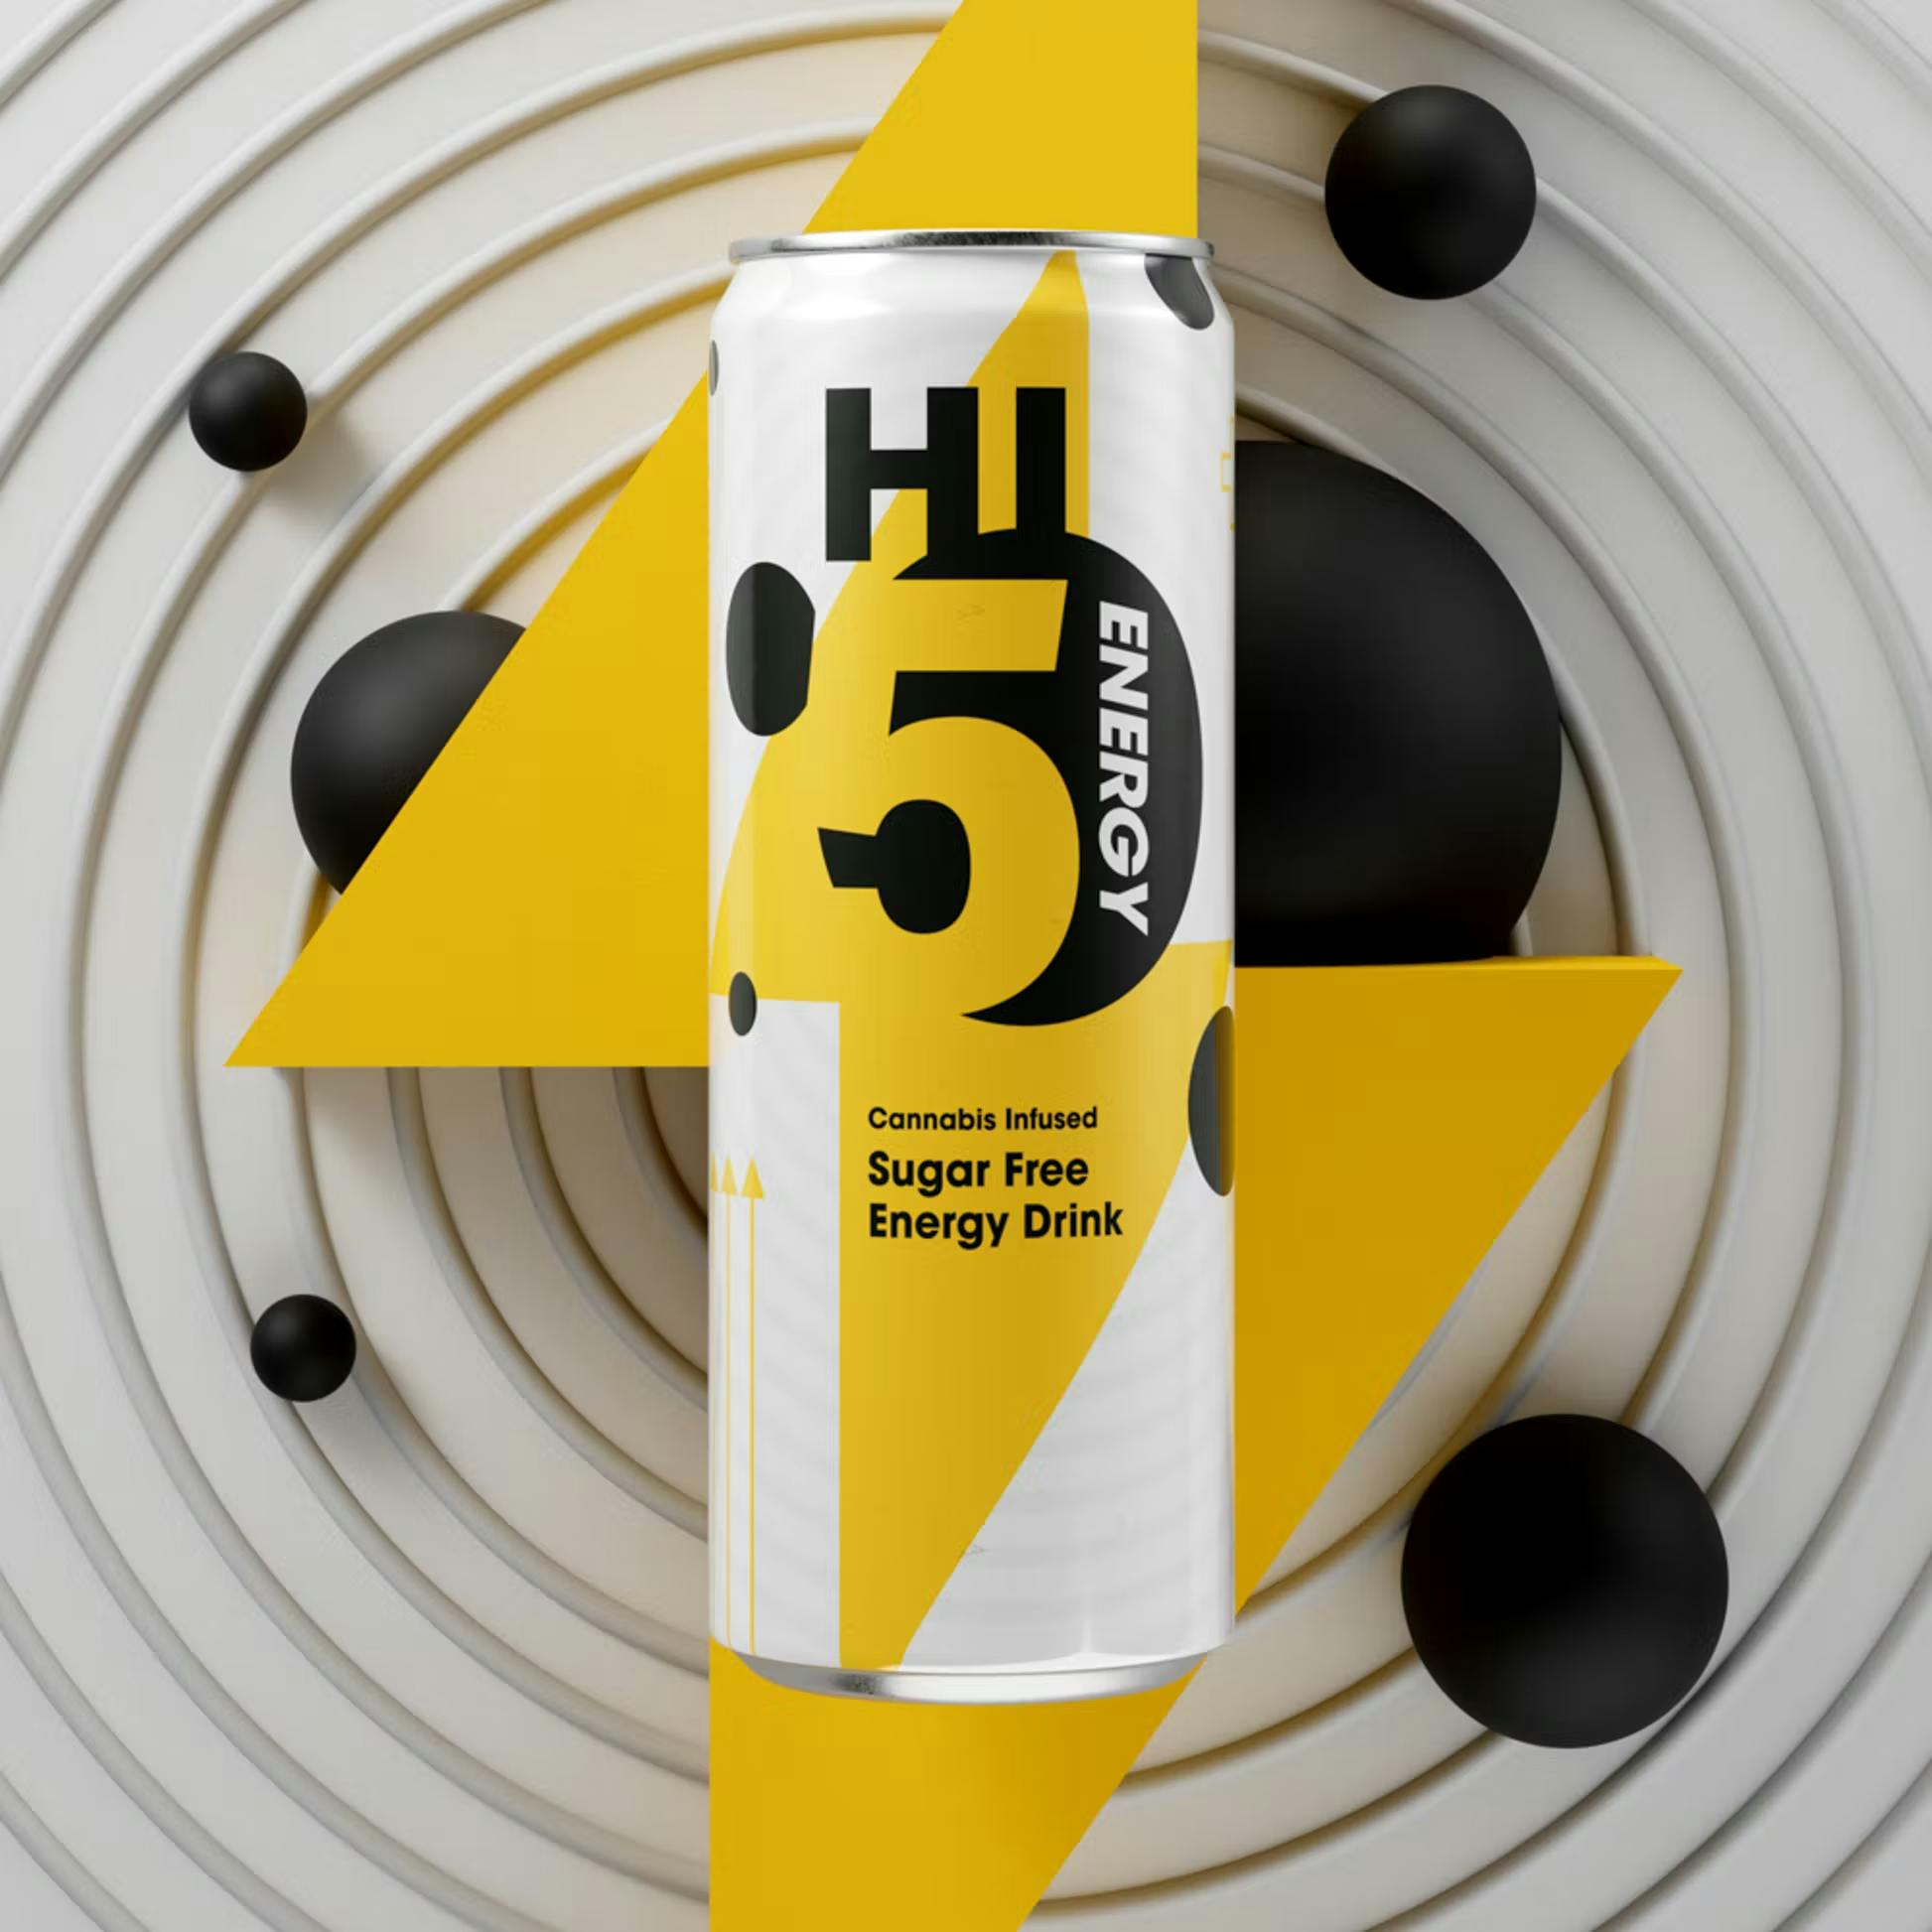 Hi5 Energy *Sugar Free* - 5 mg THC - Original